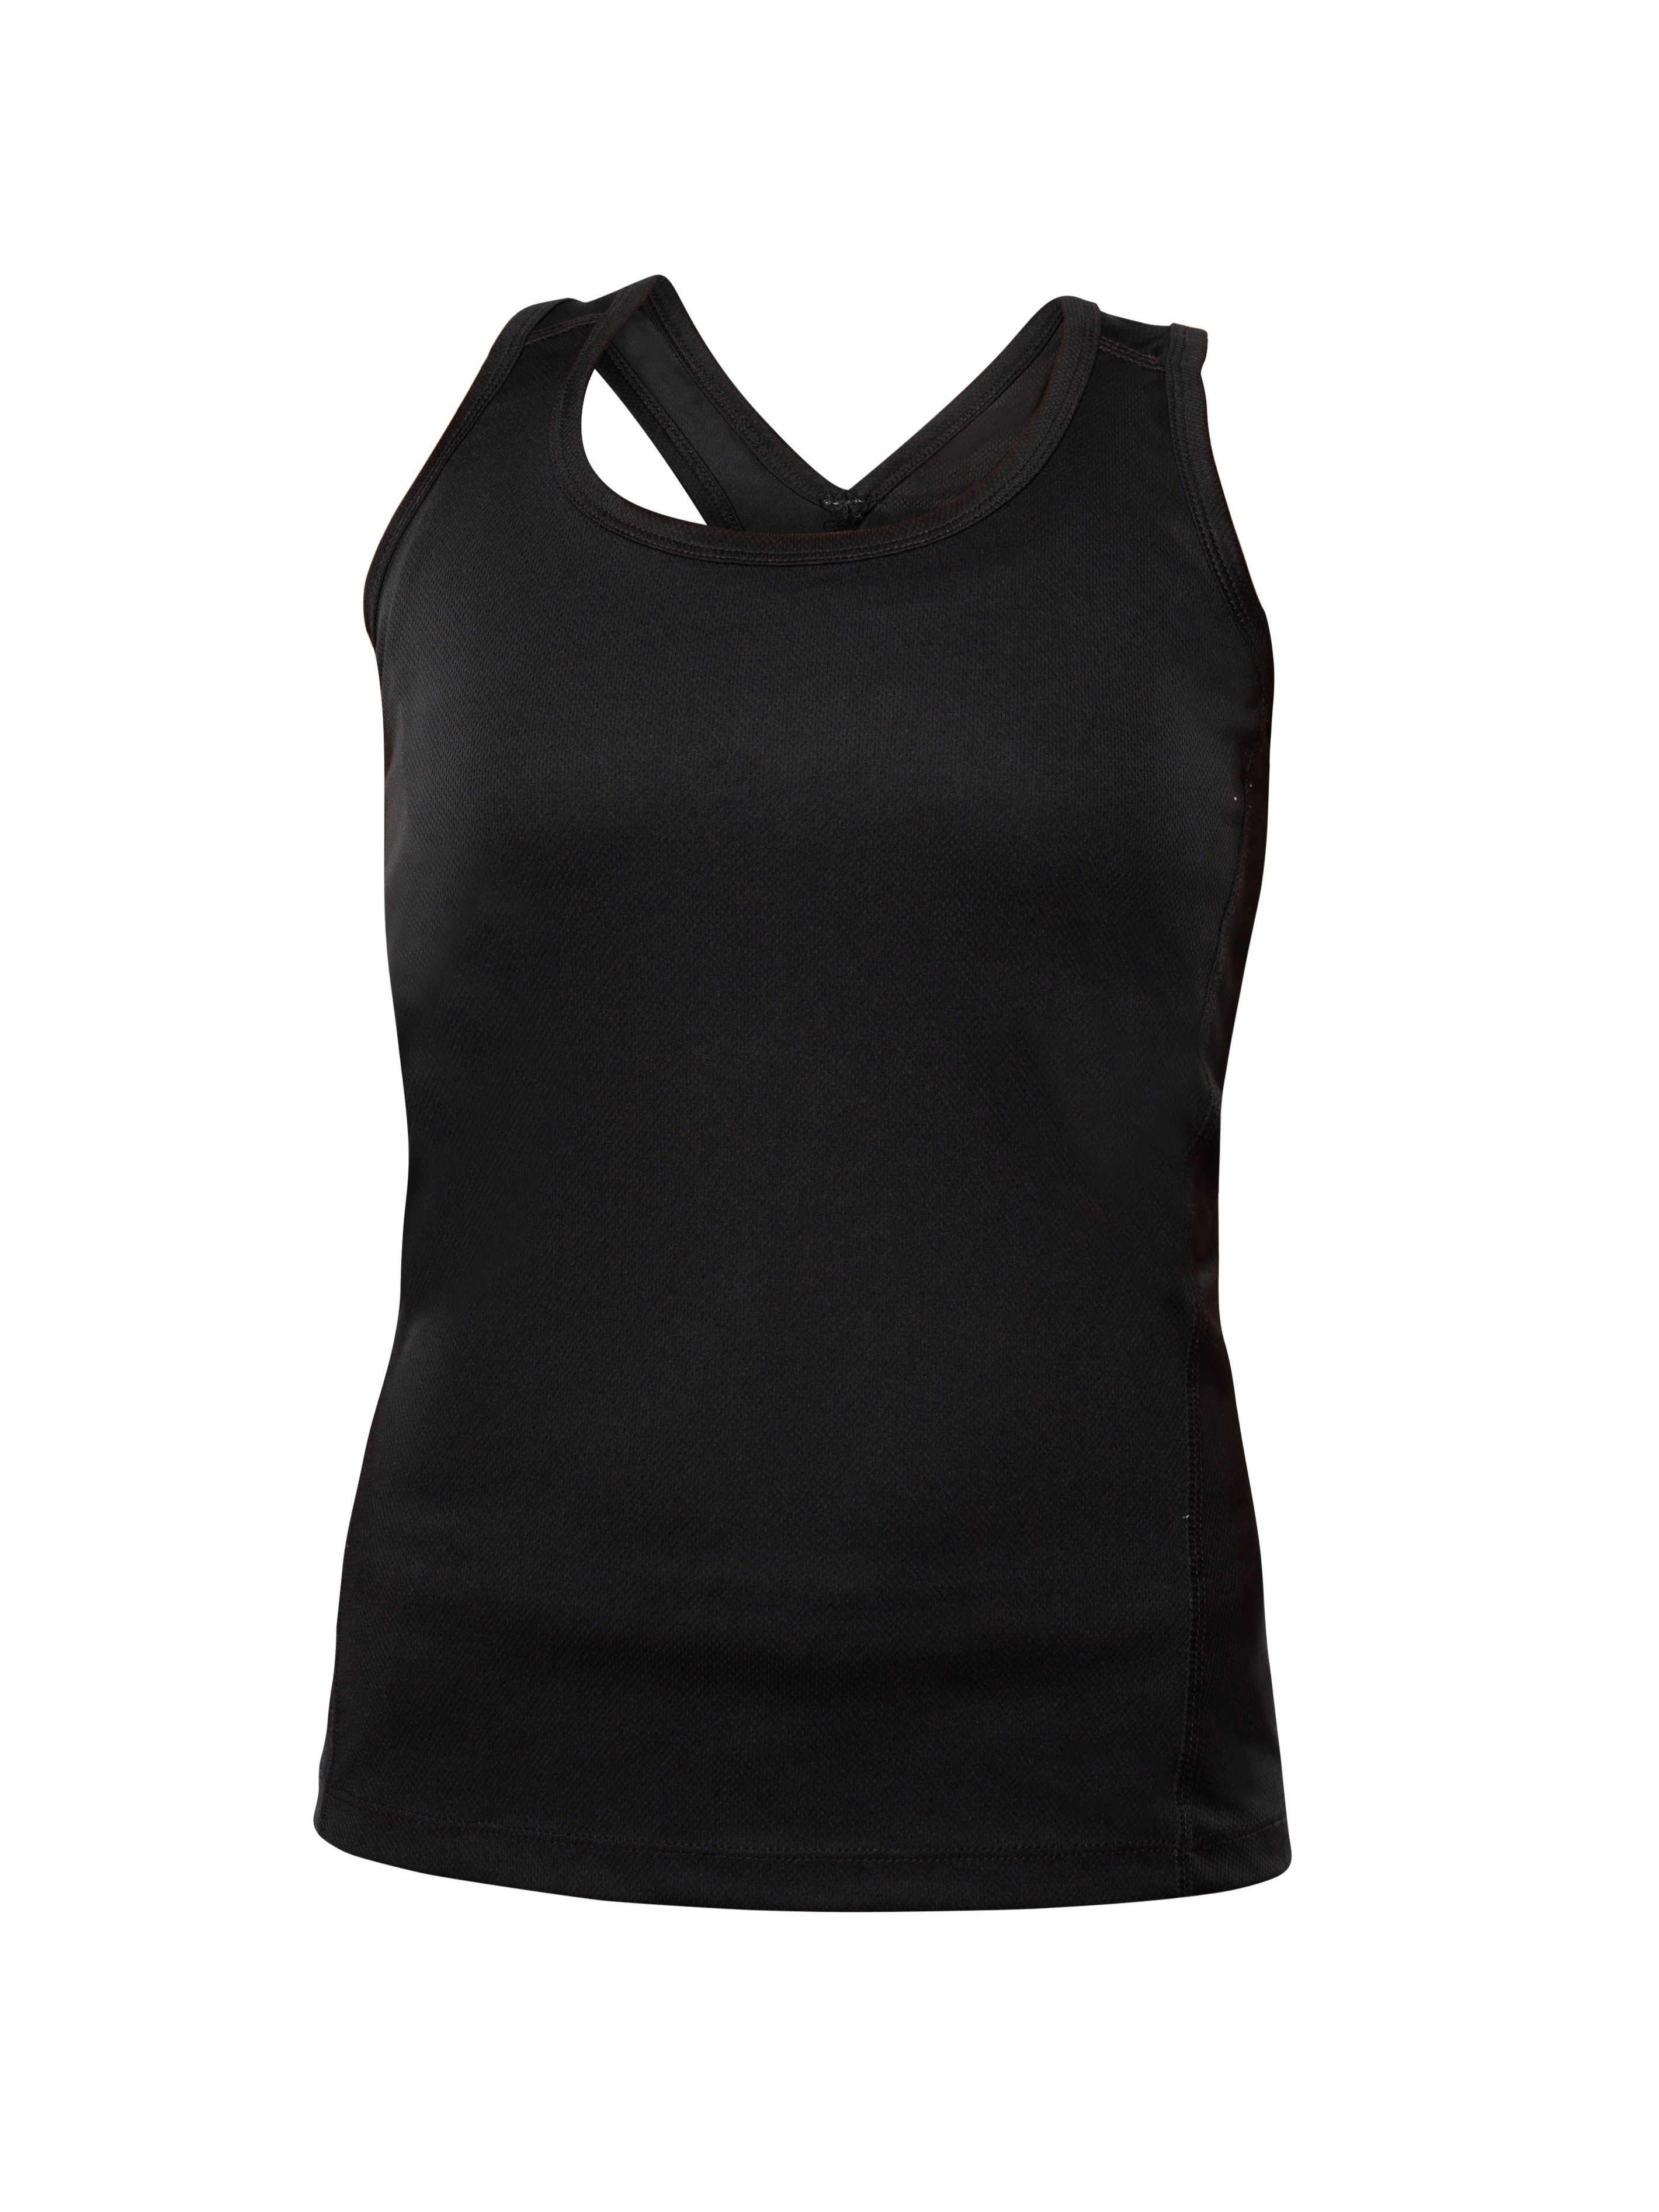 Blank Activewear L201 - Women's Tank Top Racer Back, Birdseye Mesh, 100% Polyester, Dry Fit Black - XL